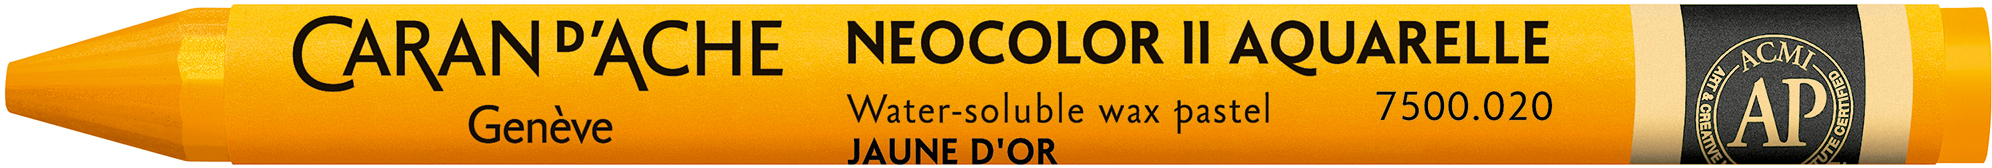 CARAN D'ACHE Crayons de cire Neocolor II 7500.020 jaune d'or